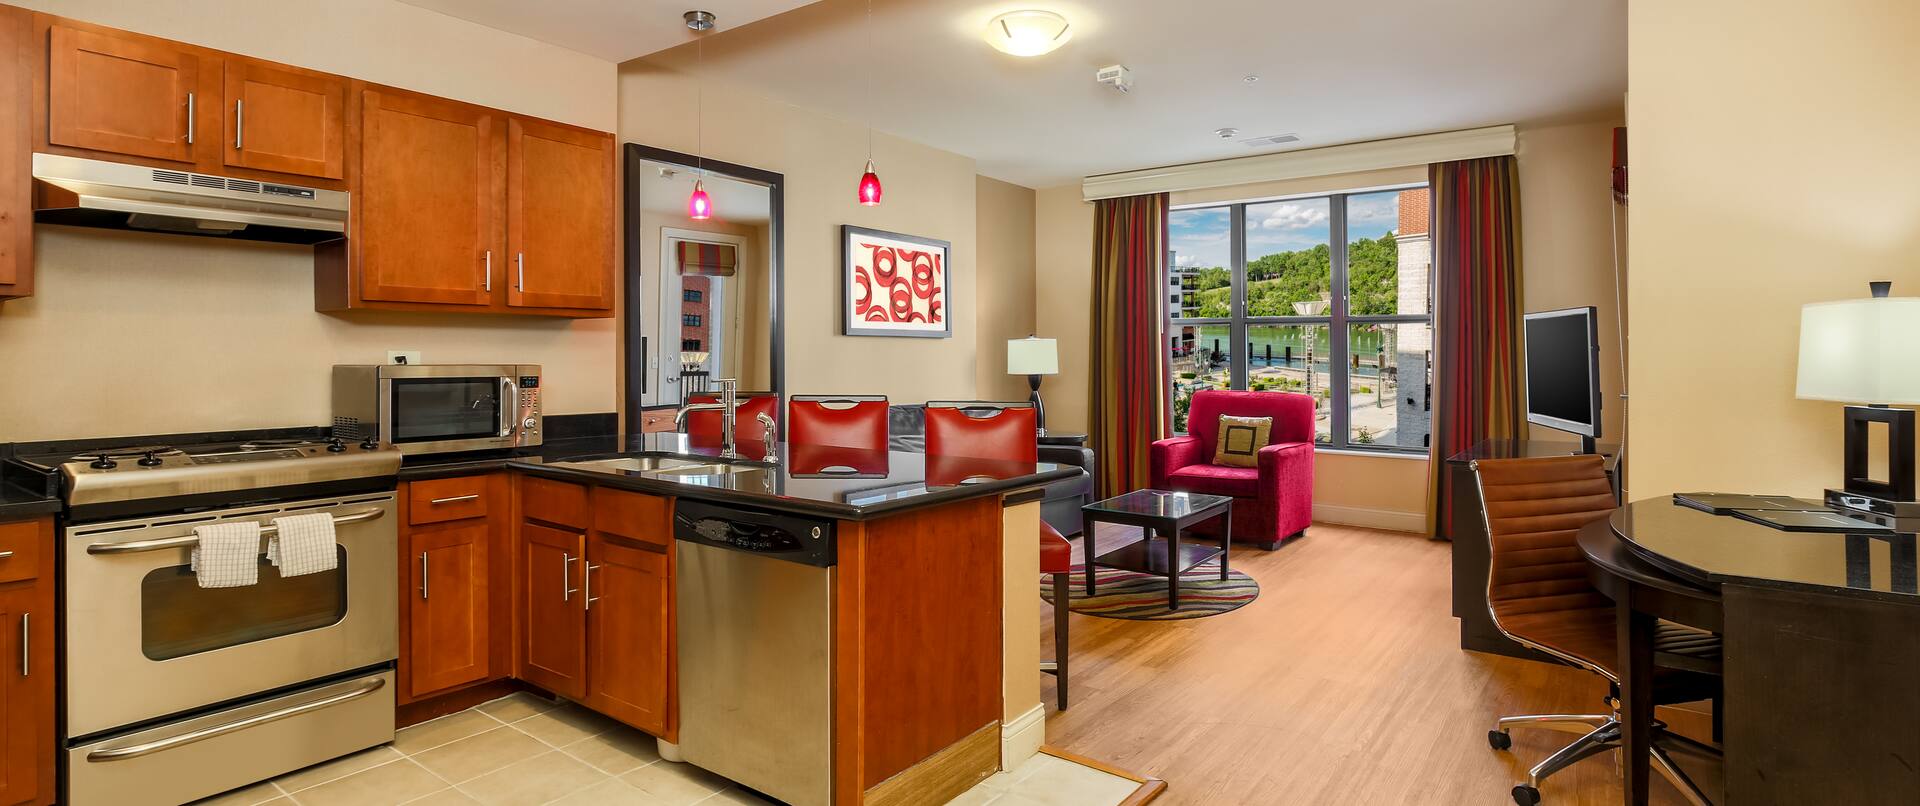 Hilton Promenade at Branson Landing Hotel, MO - Accessible Condo Kitchen and Living Area